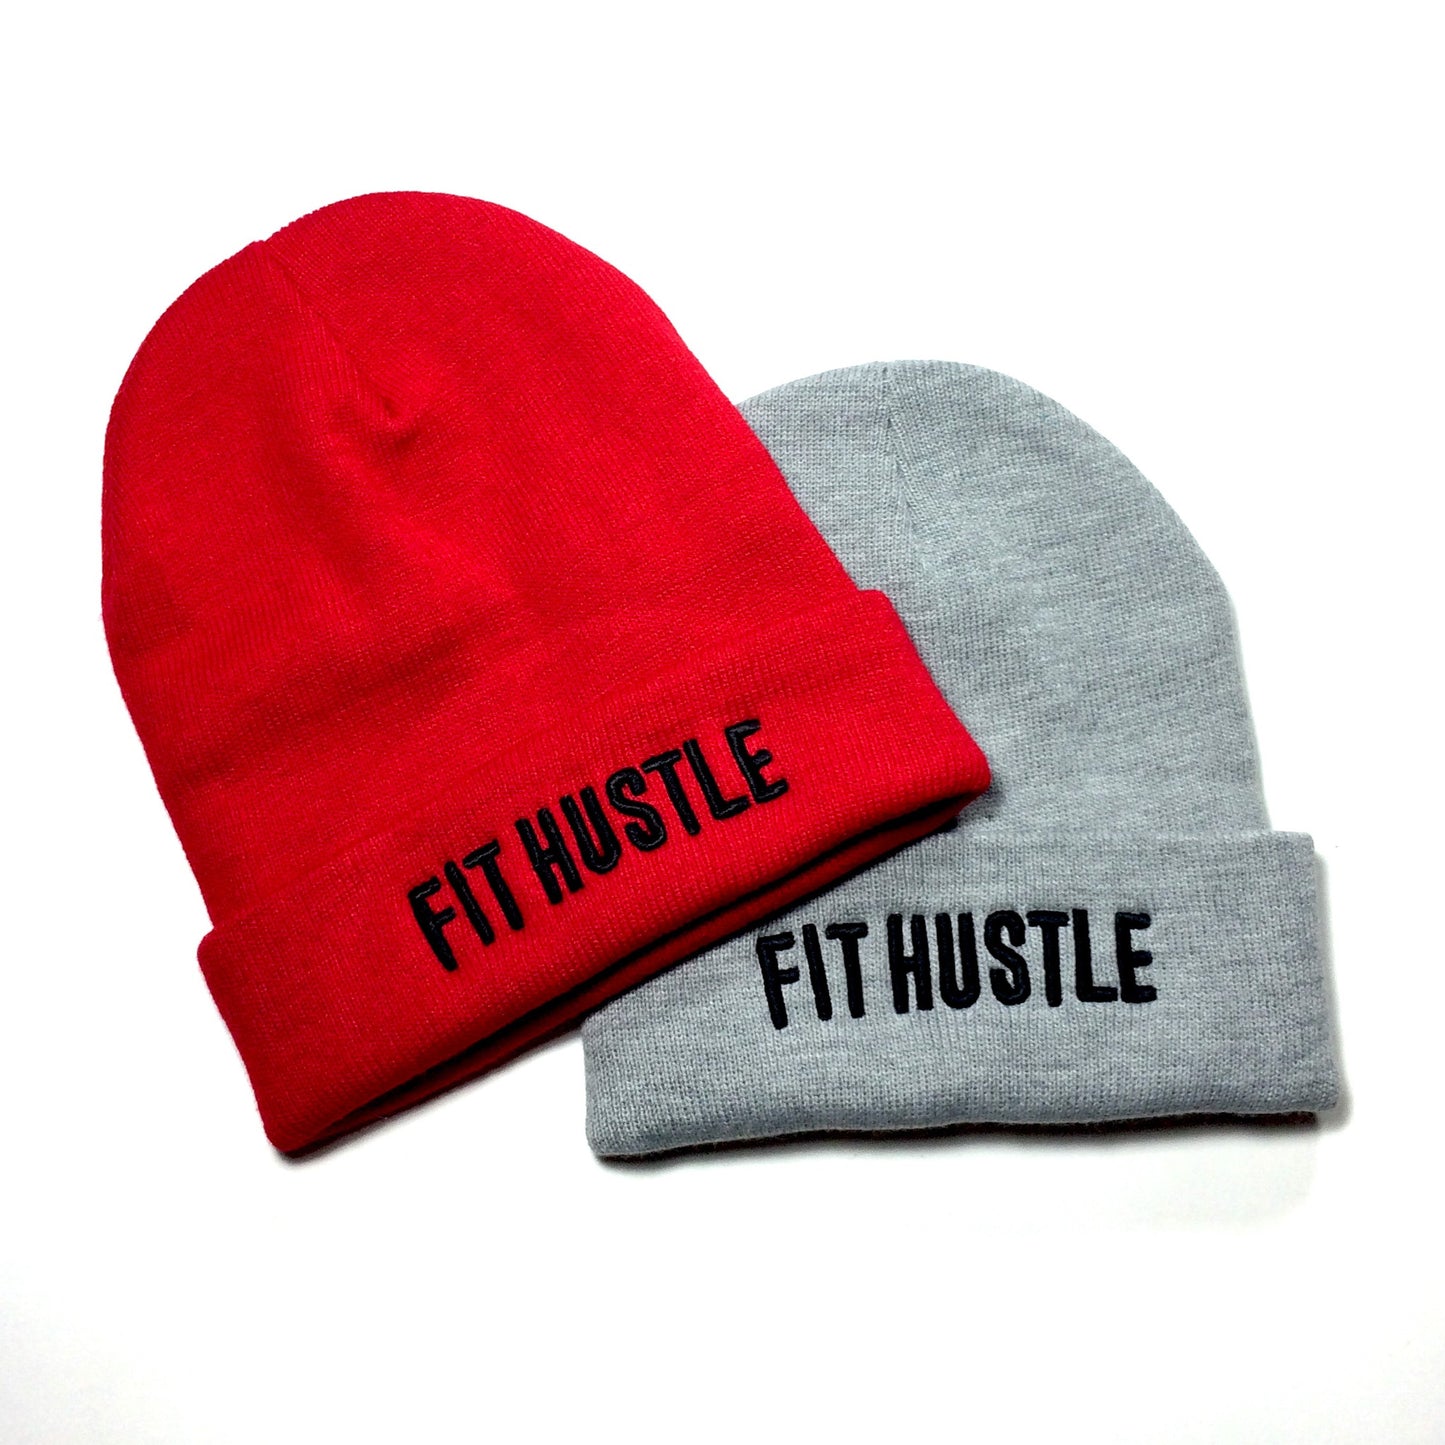 "Fit Hustle" Beanies